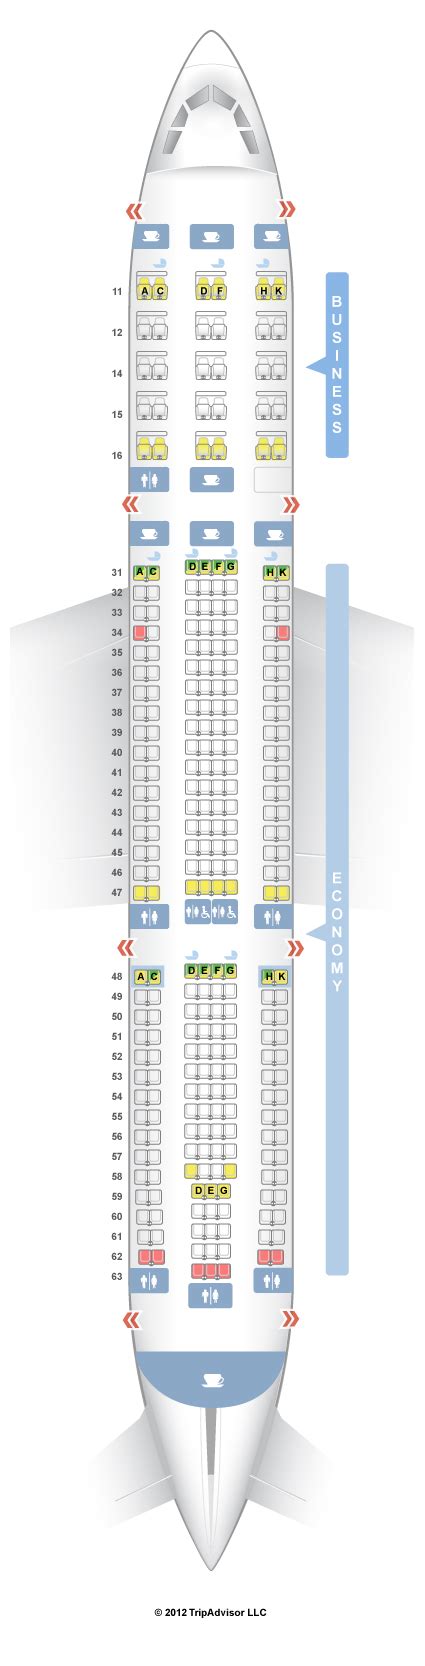 Seatguru Seat Map Singapore Airlines Airbus A330 300 333